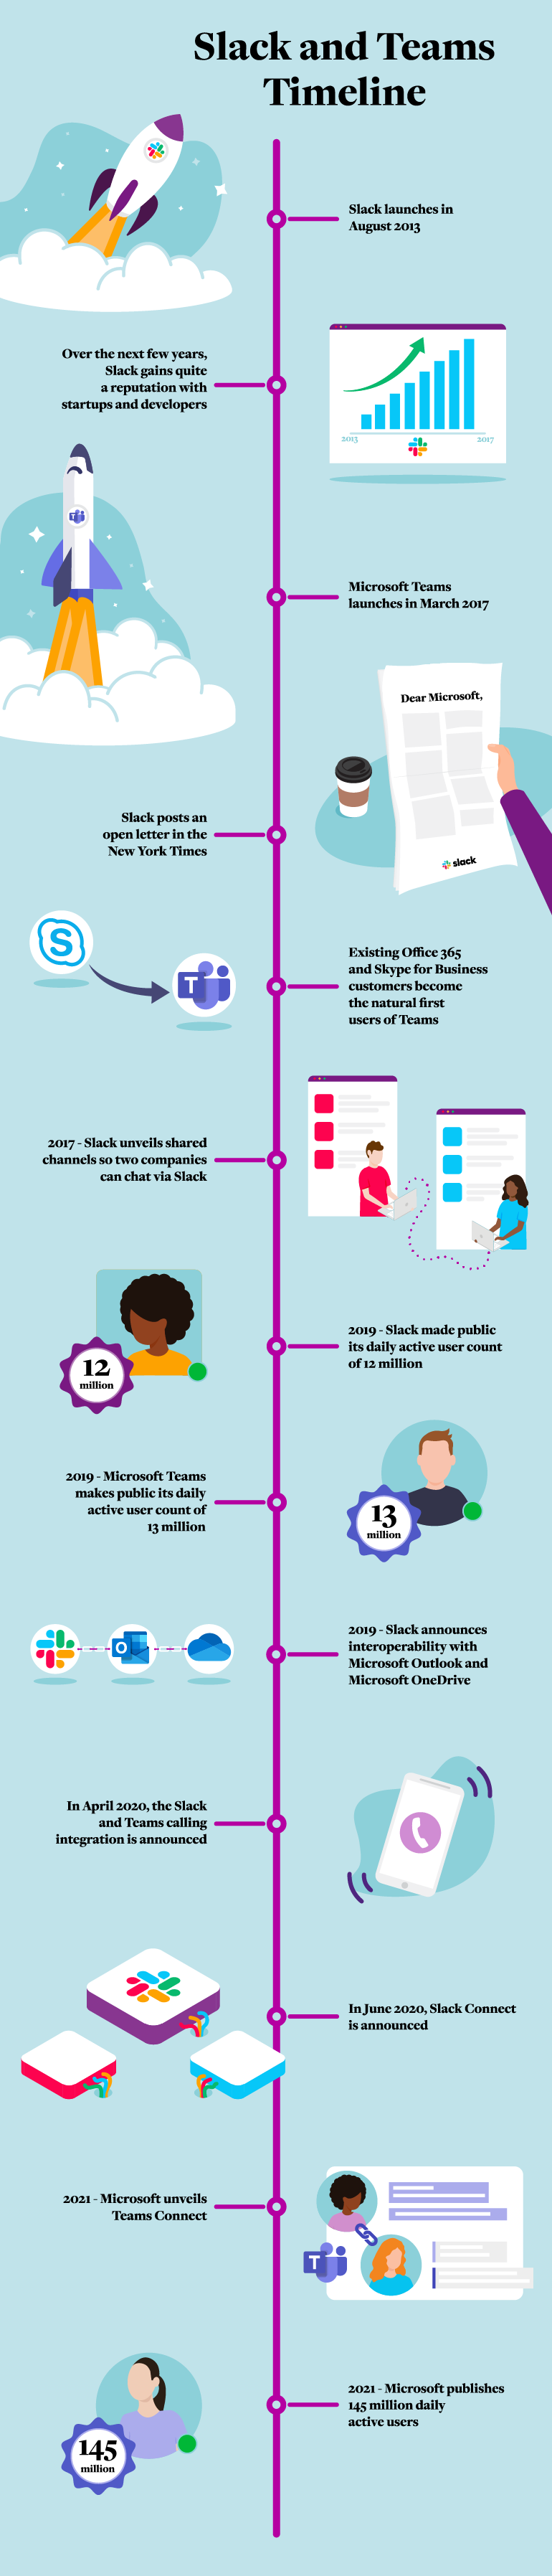 History of Slack vs Microsoft Teams